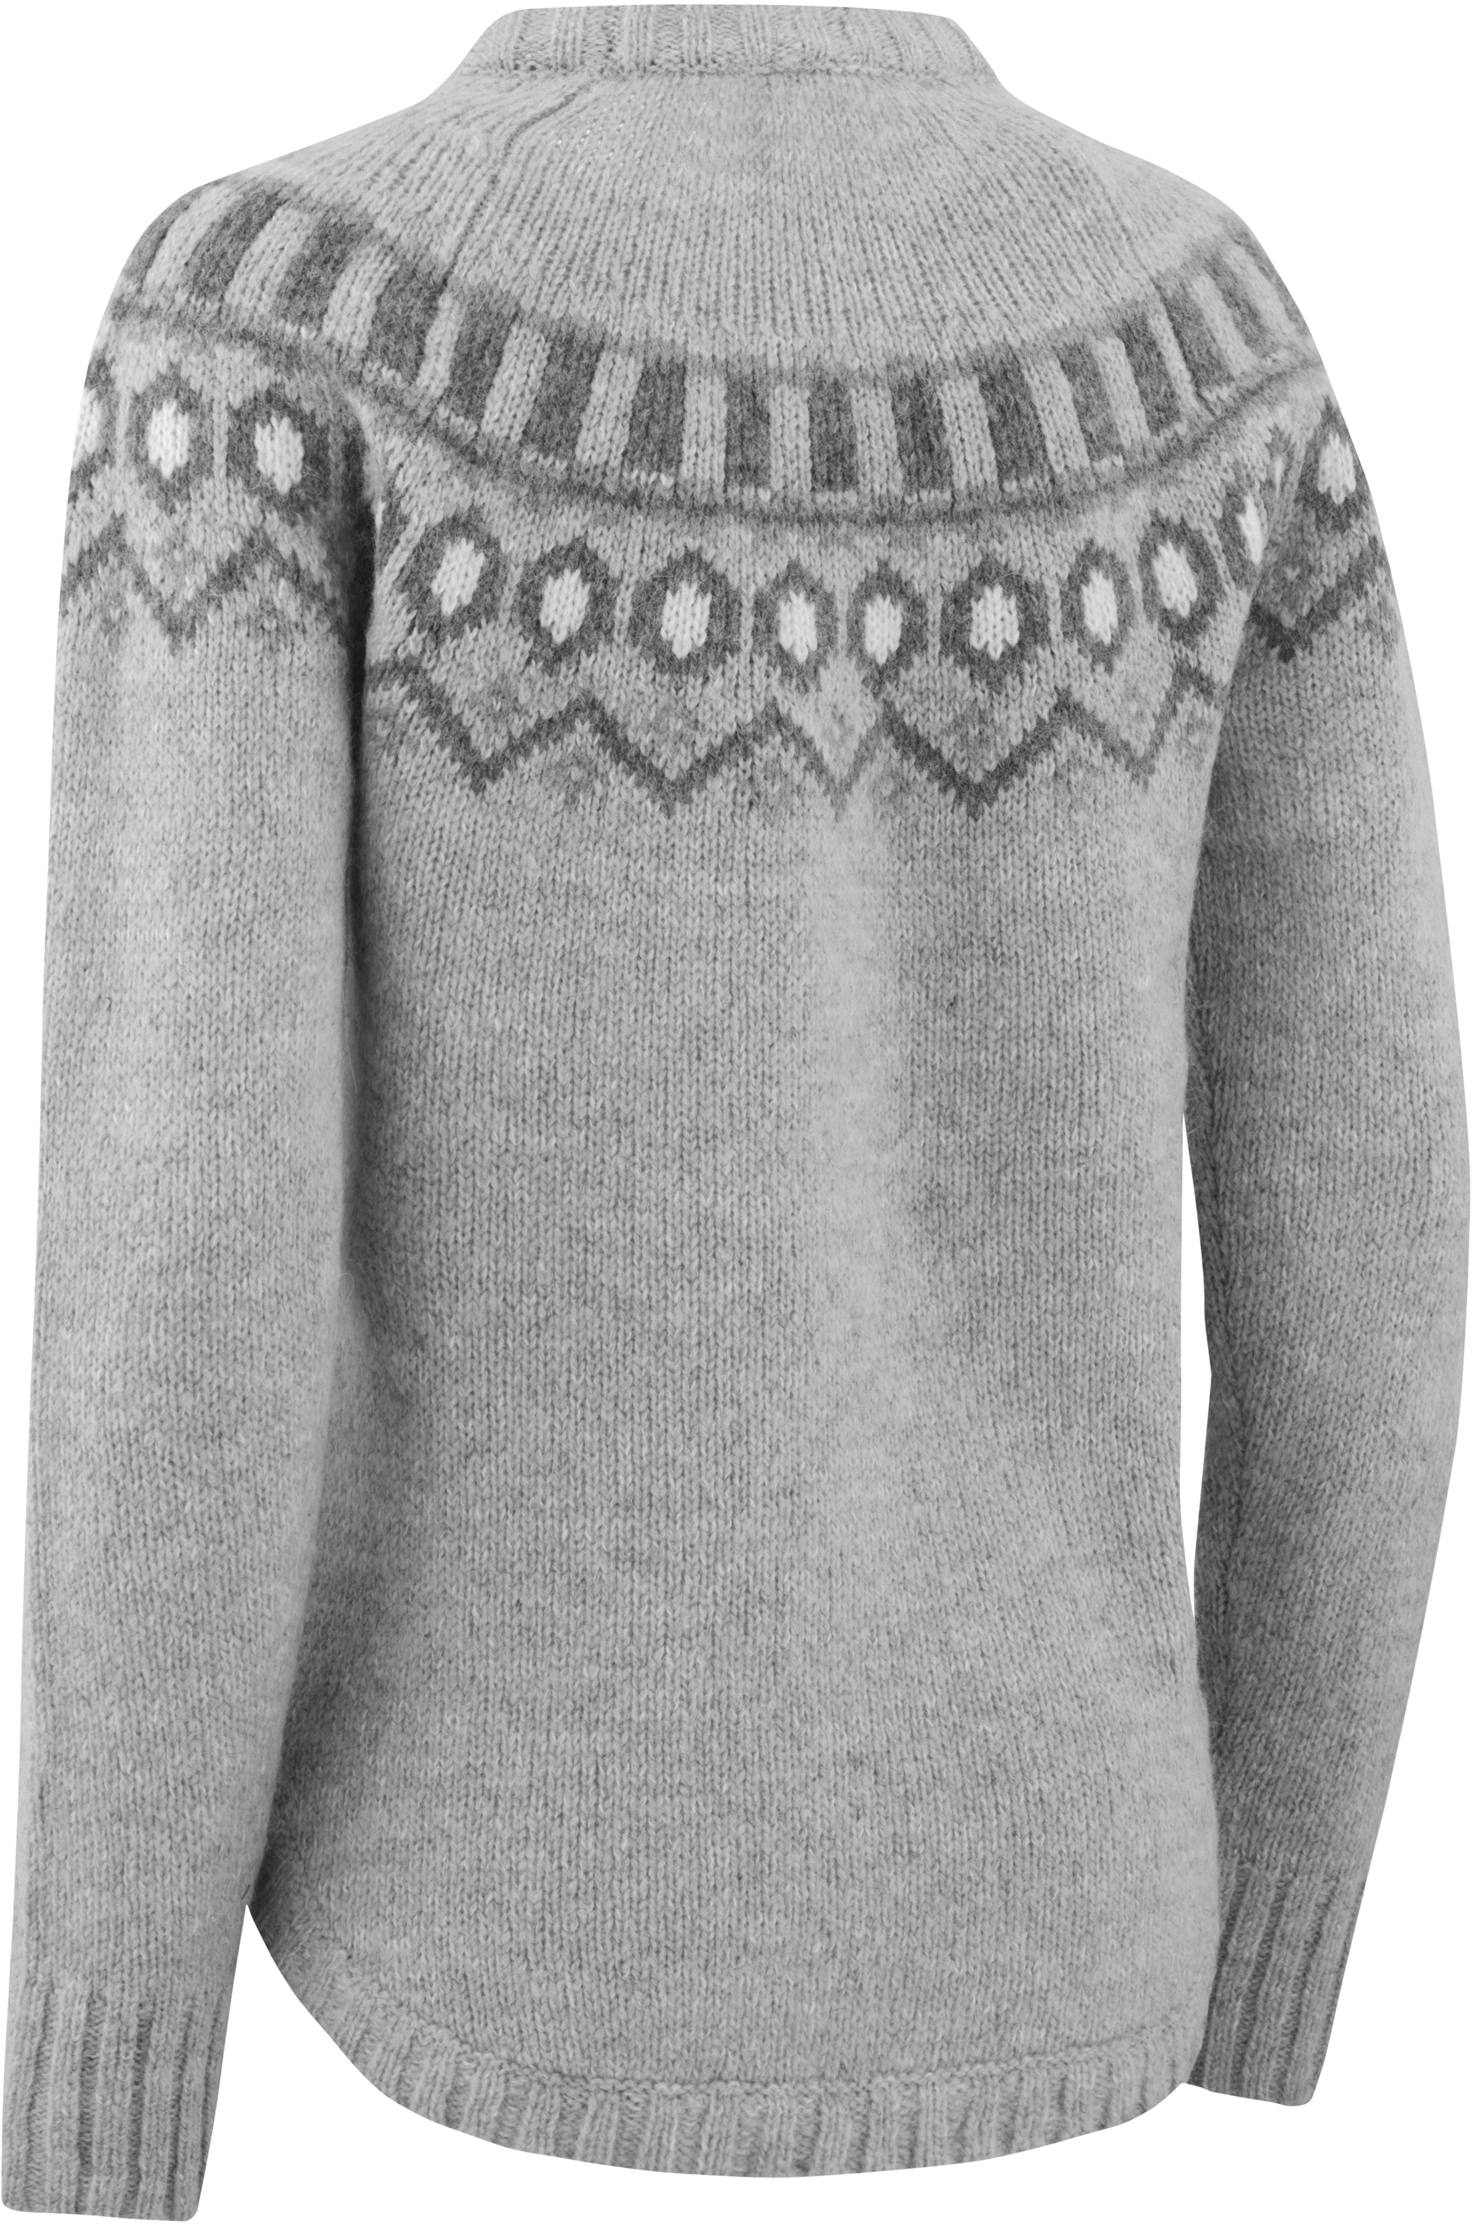 Women’s sweater